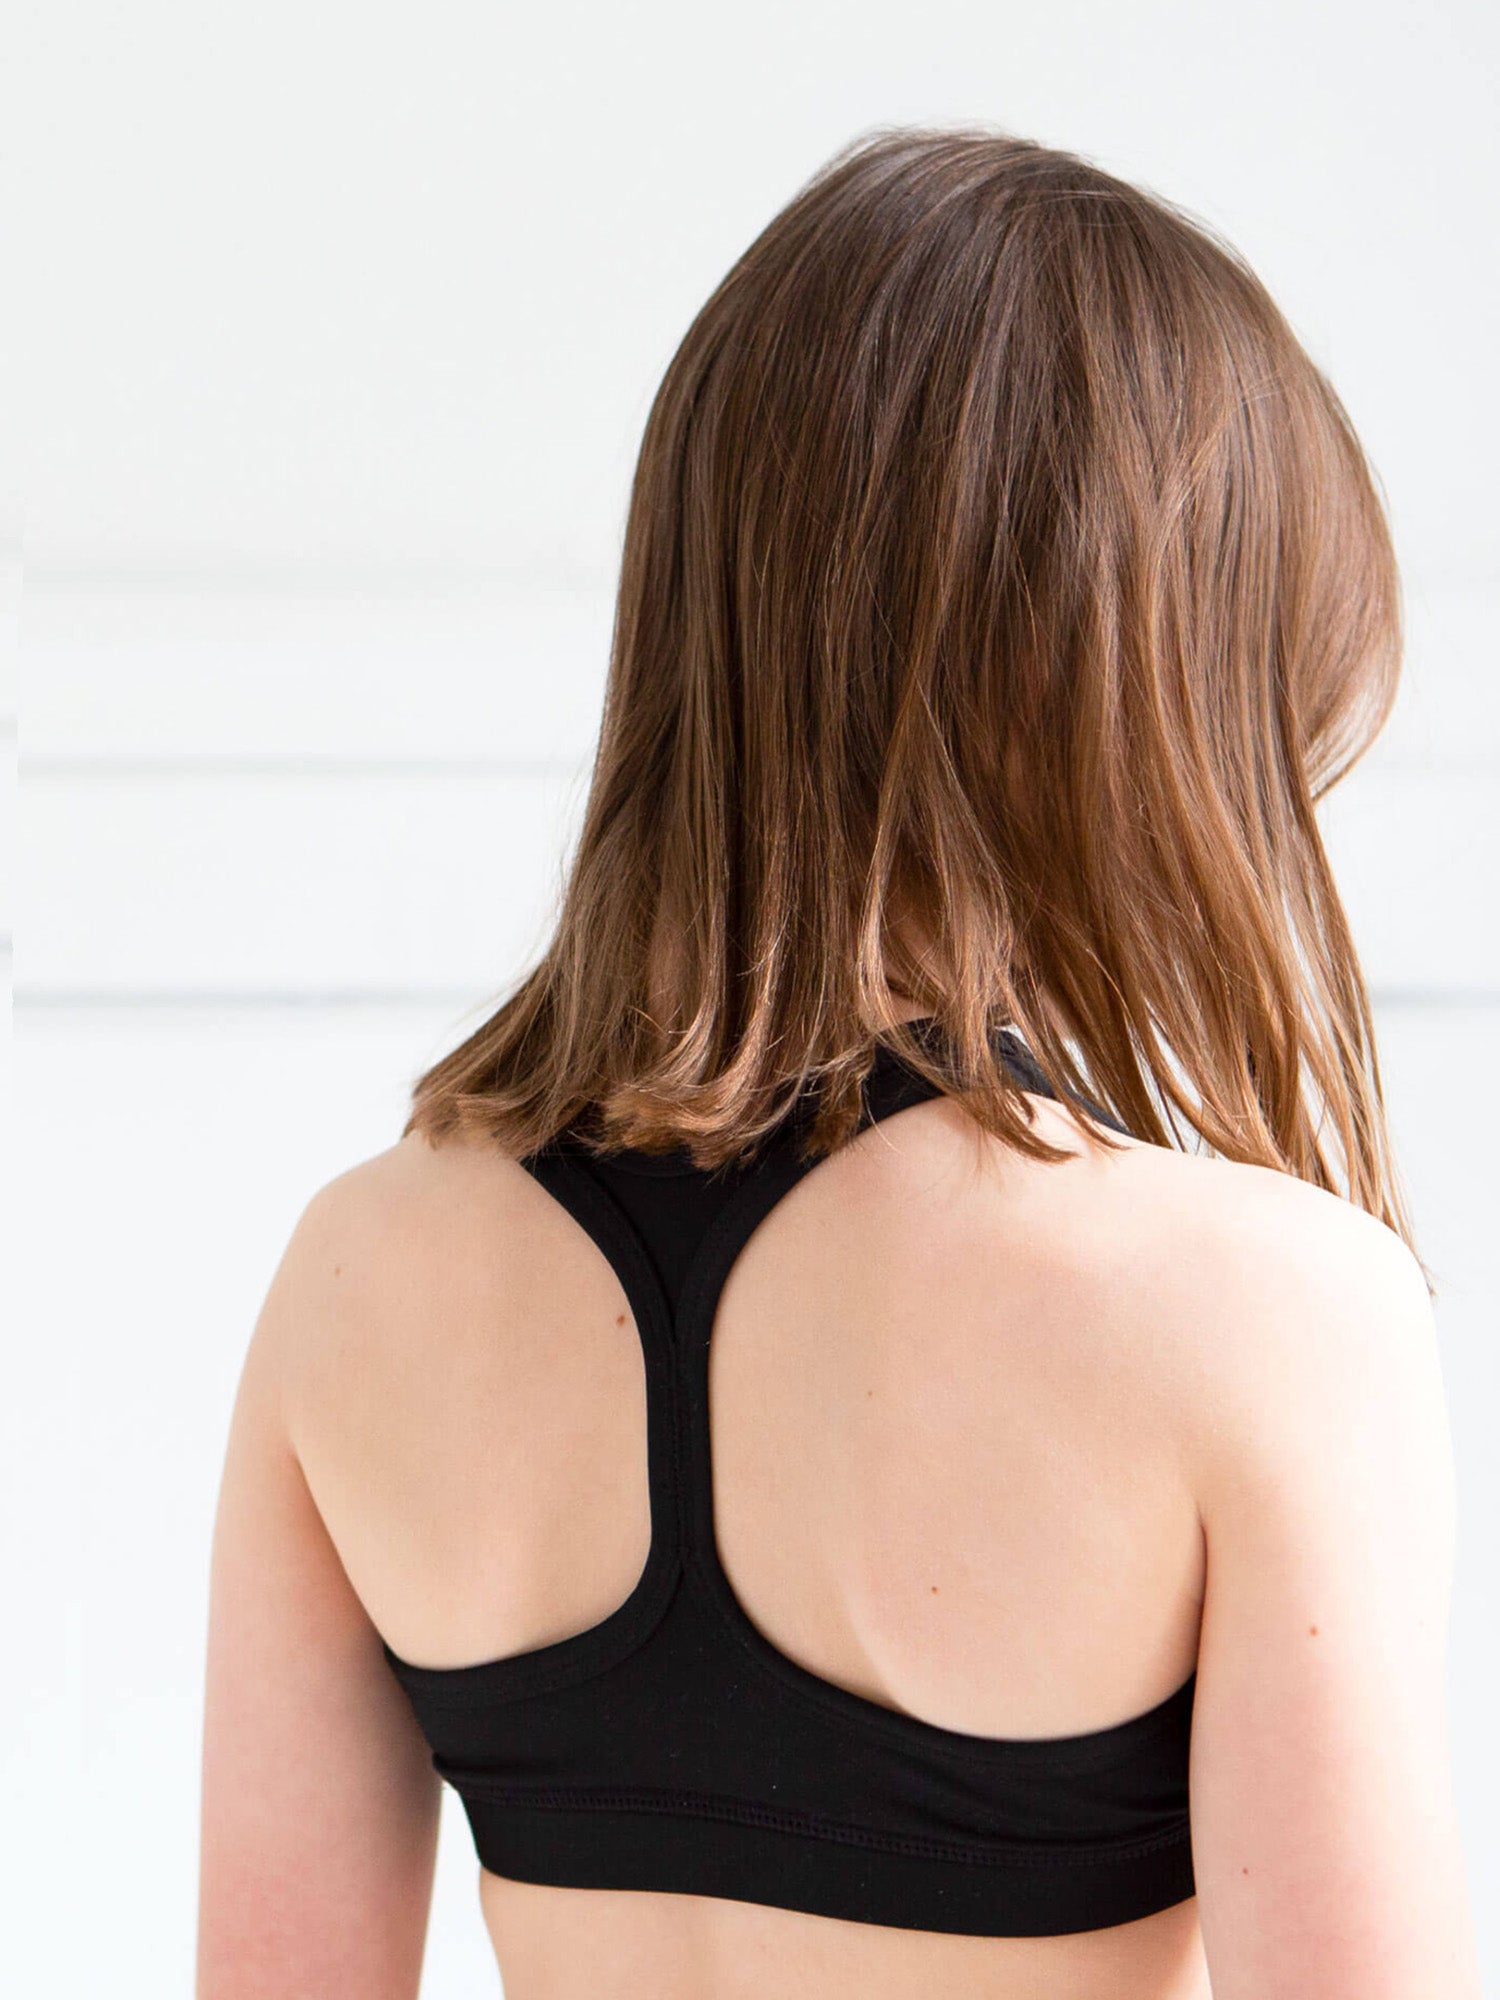 Cotton:On v-neck sports bra in black